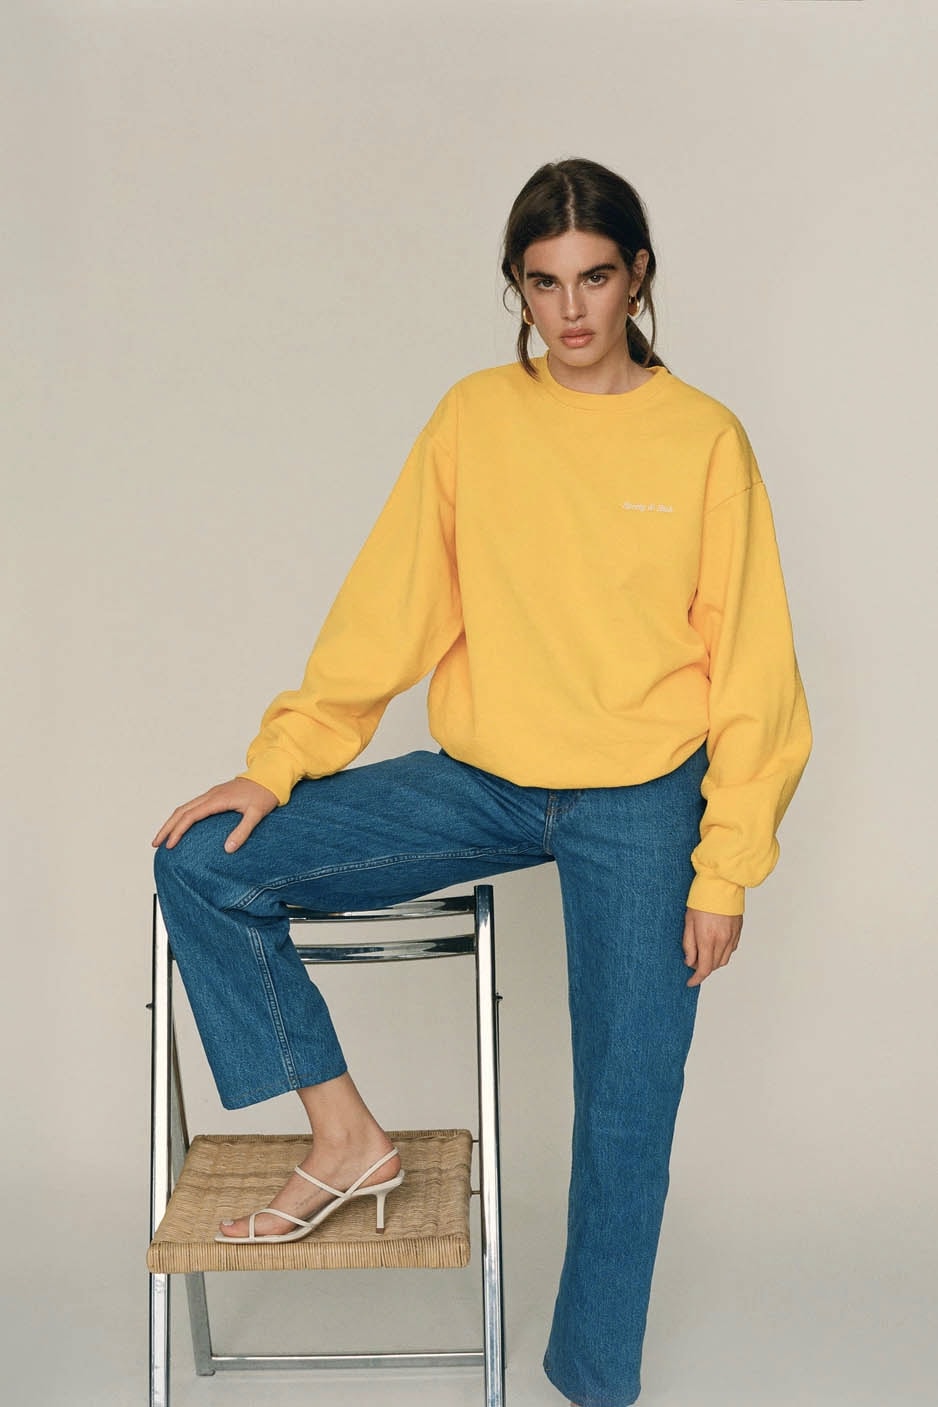 Sporty & Rich Emily Oberg Fall/Winter 2019 Drop Collection Lookbook Hoodies Streetwear